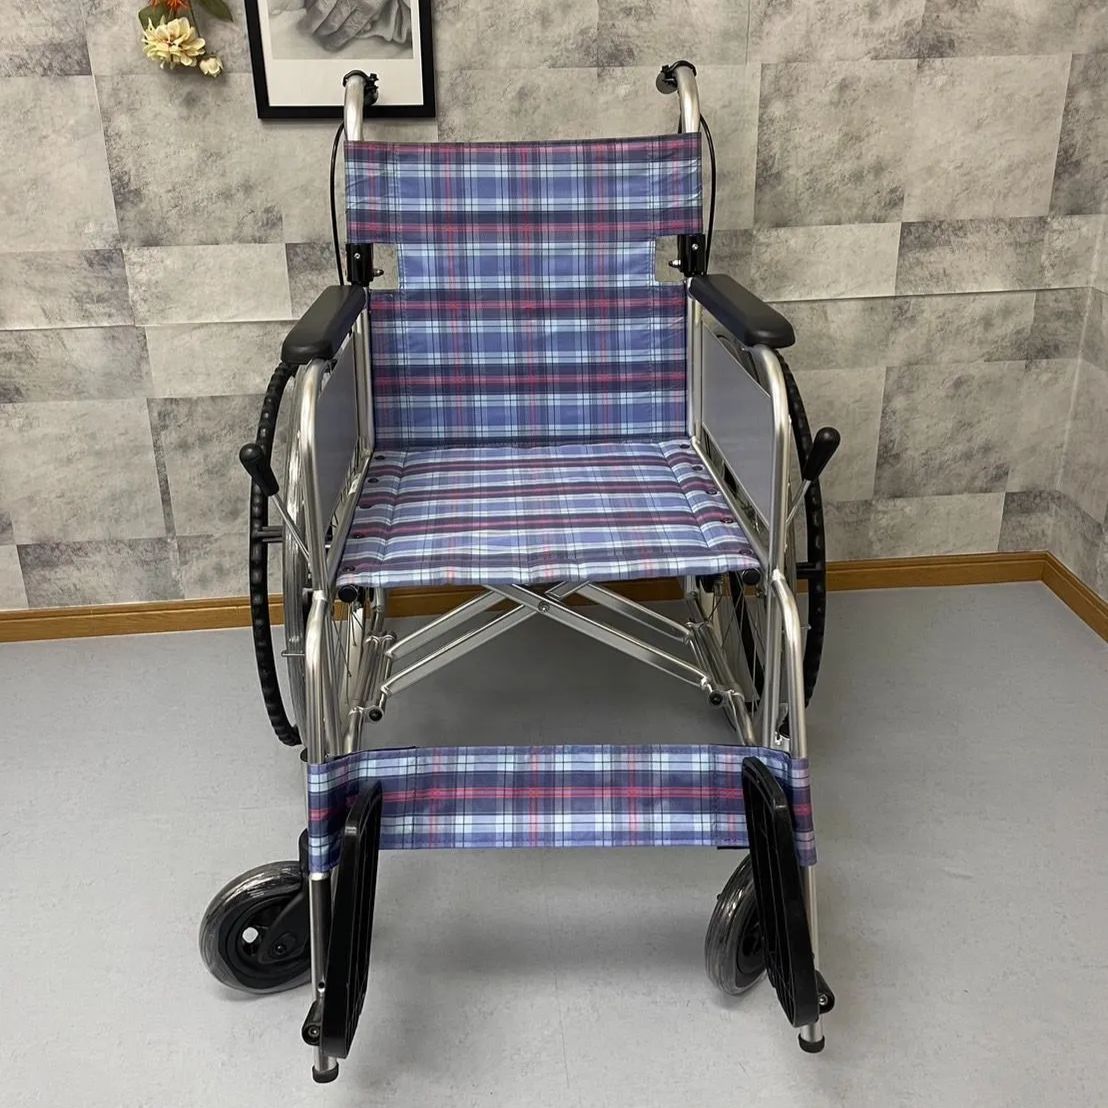 Miki 超軽量 自走型 車椅子 M-43KDB/SP 中古 介護用品 中古車椅子 